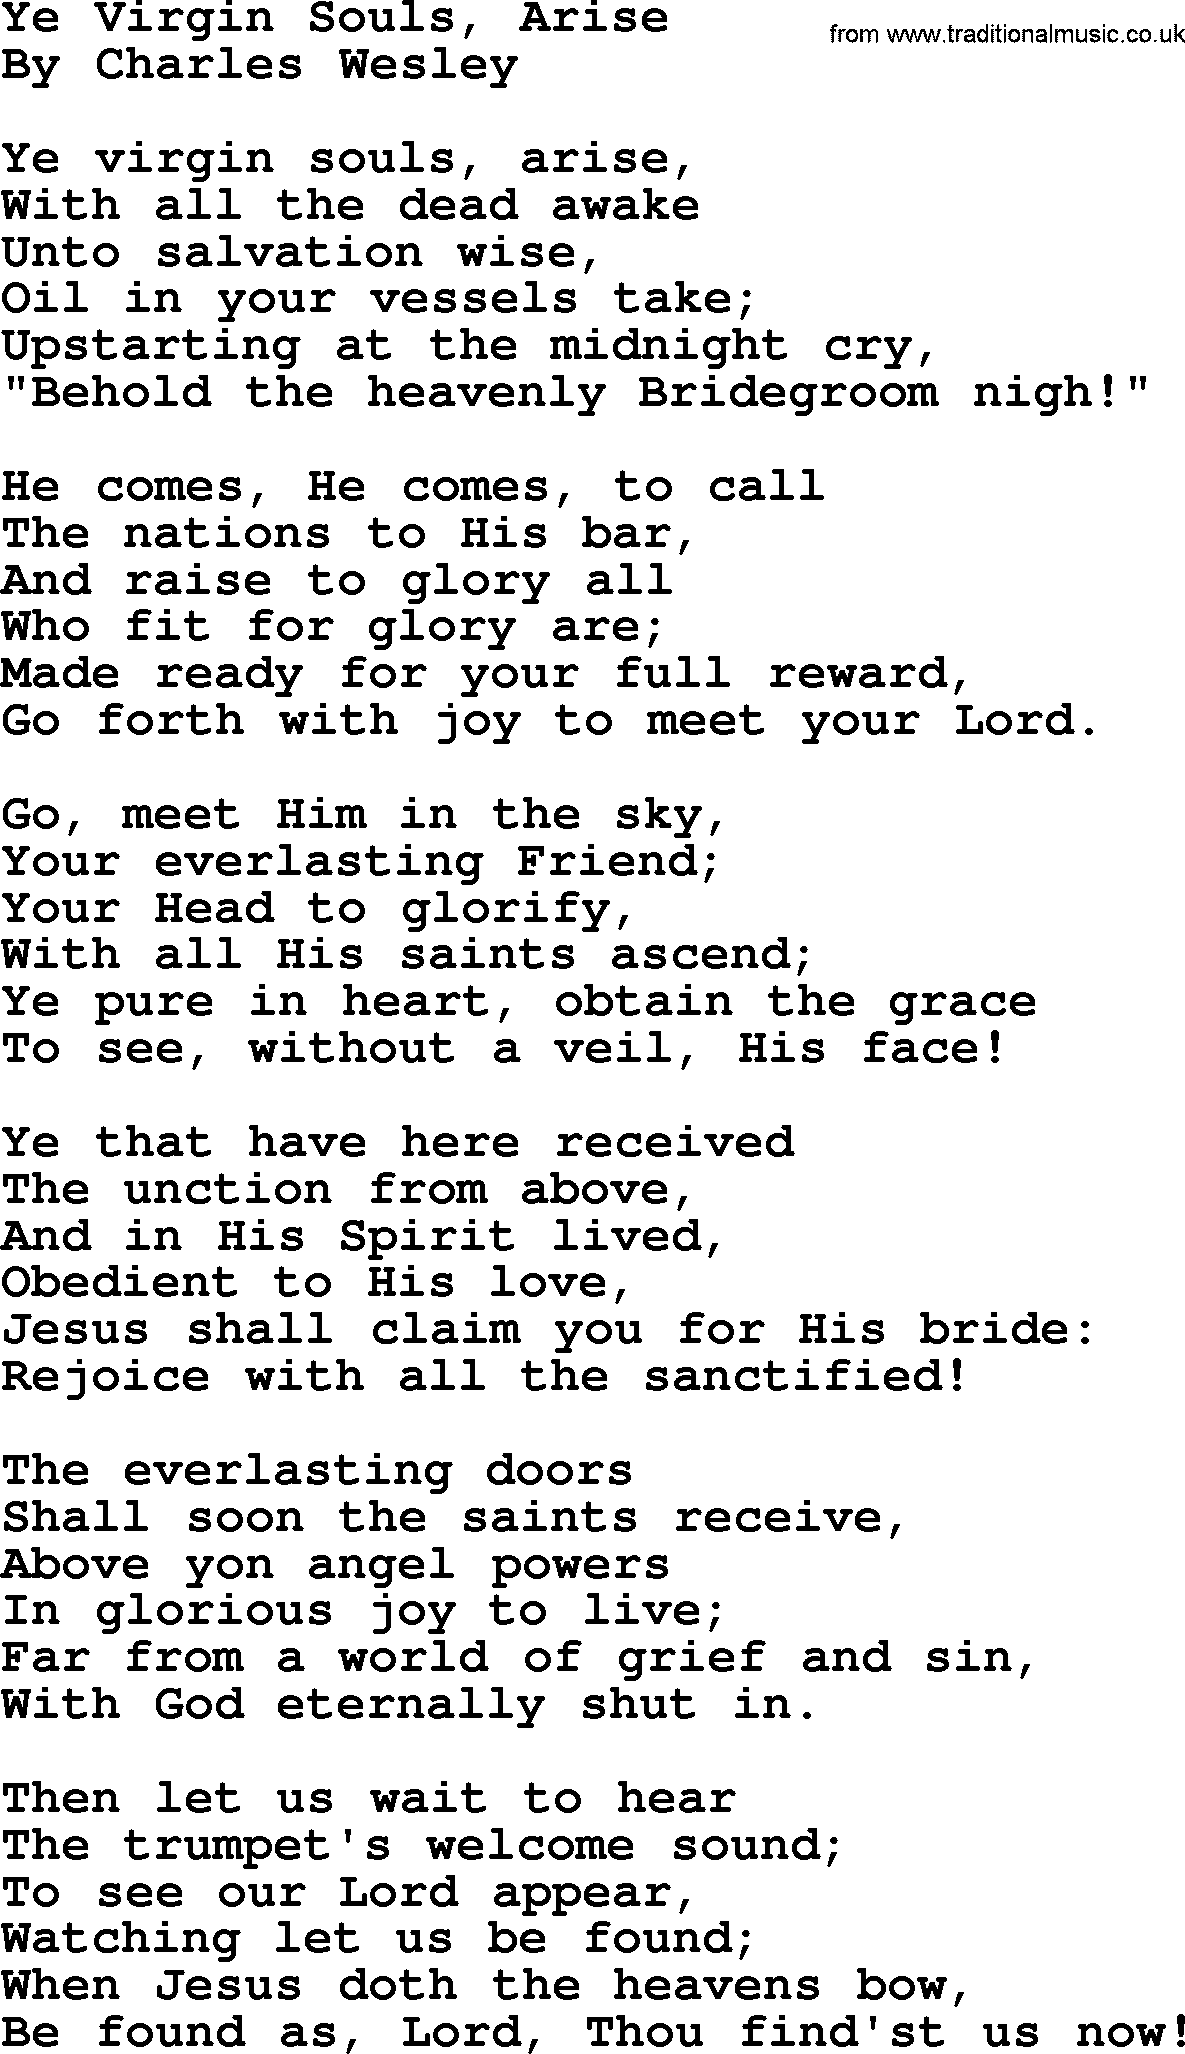 Charles Wesley hymn: Ye Virgin Souls, Arise, lyrics